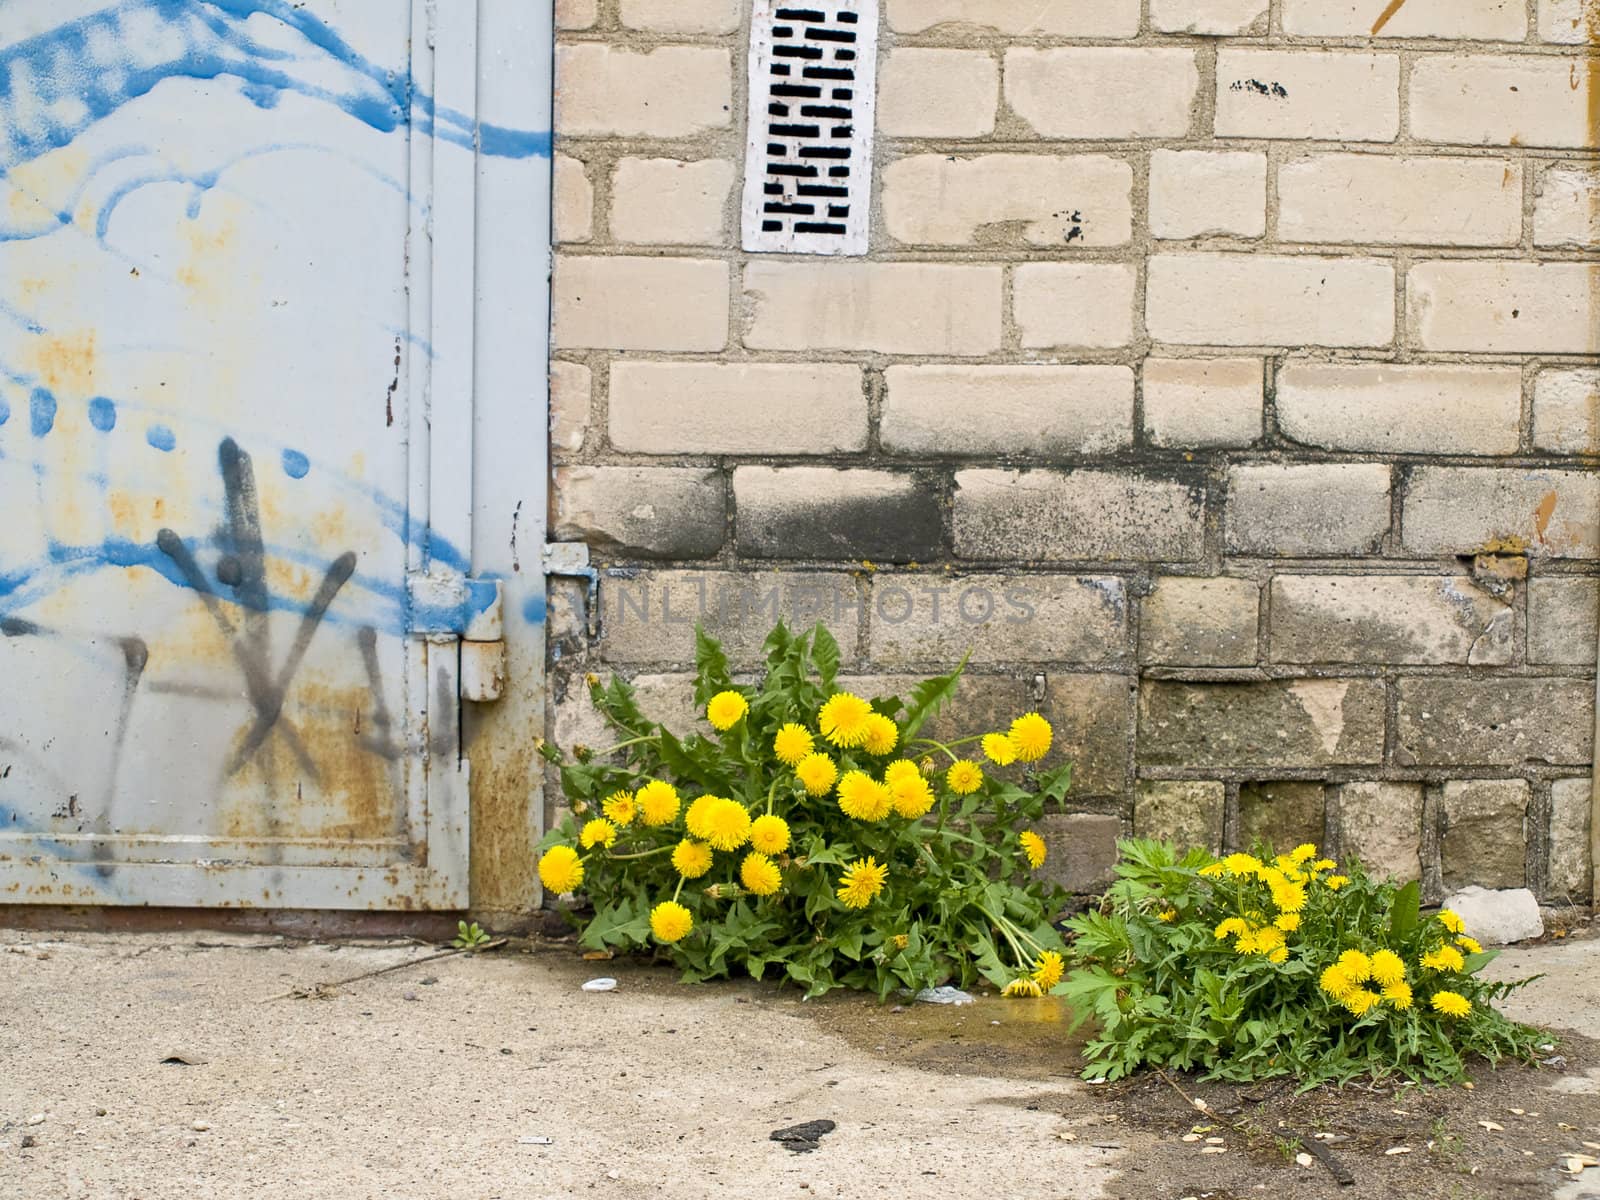 Yellow dandelions near the brick wall and door